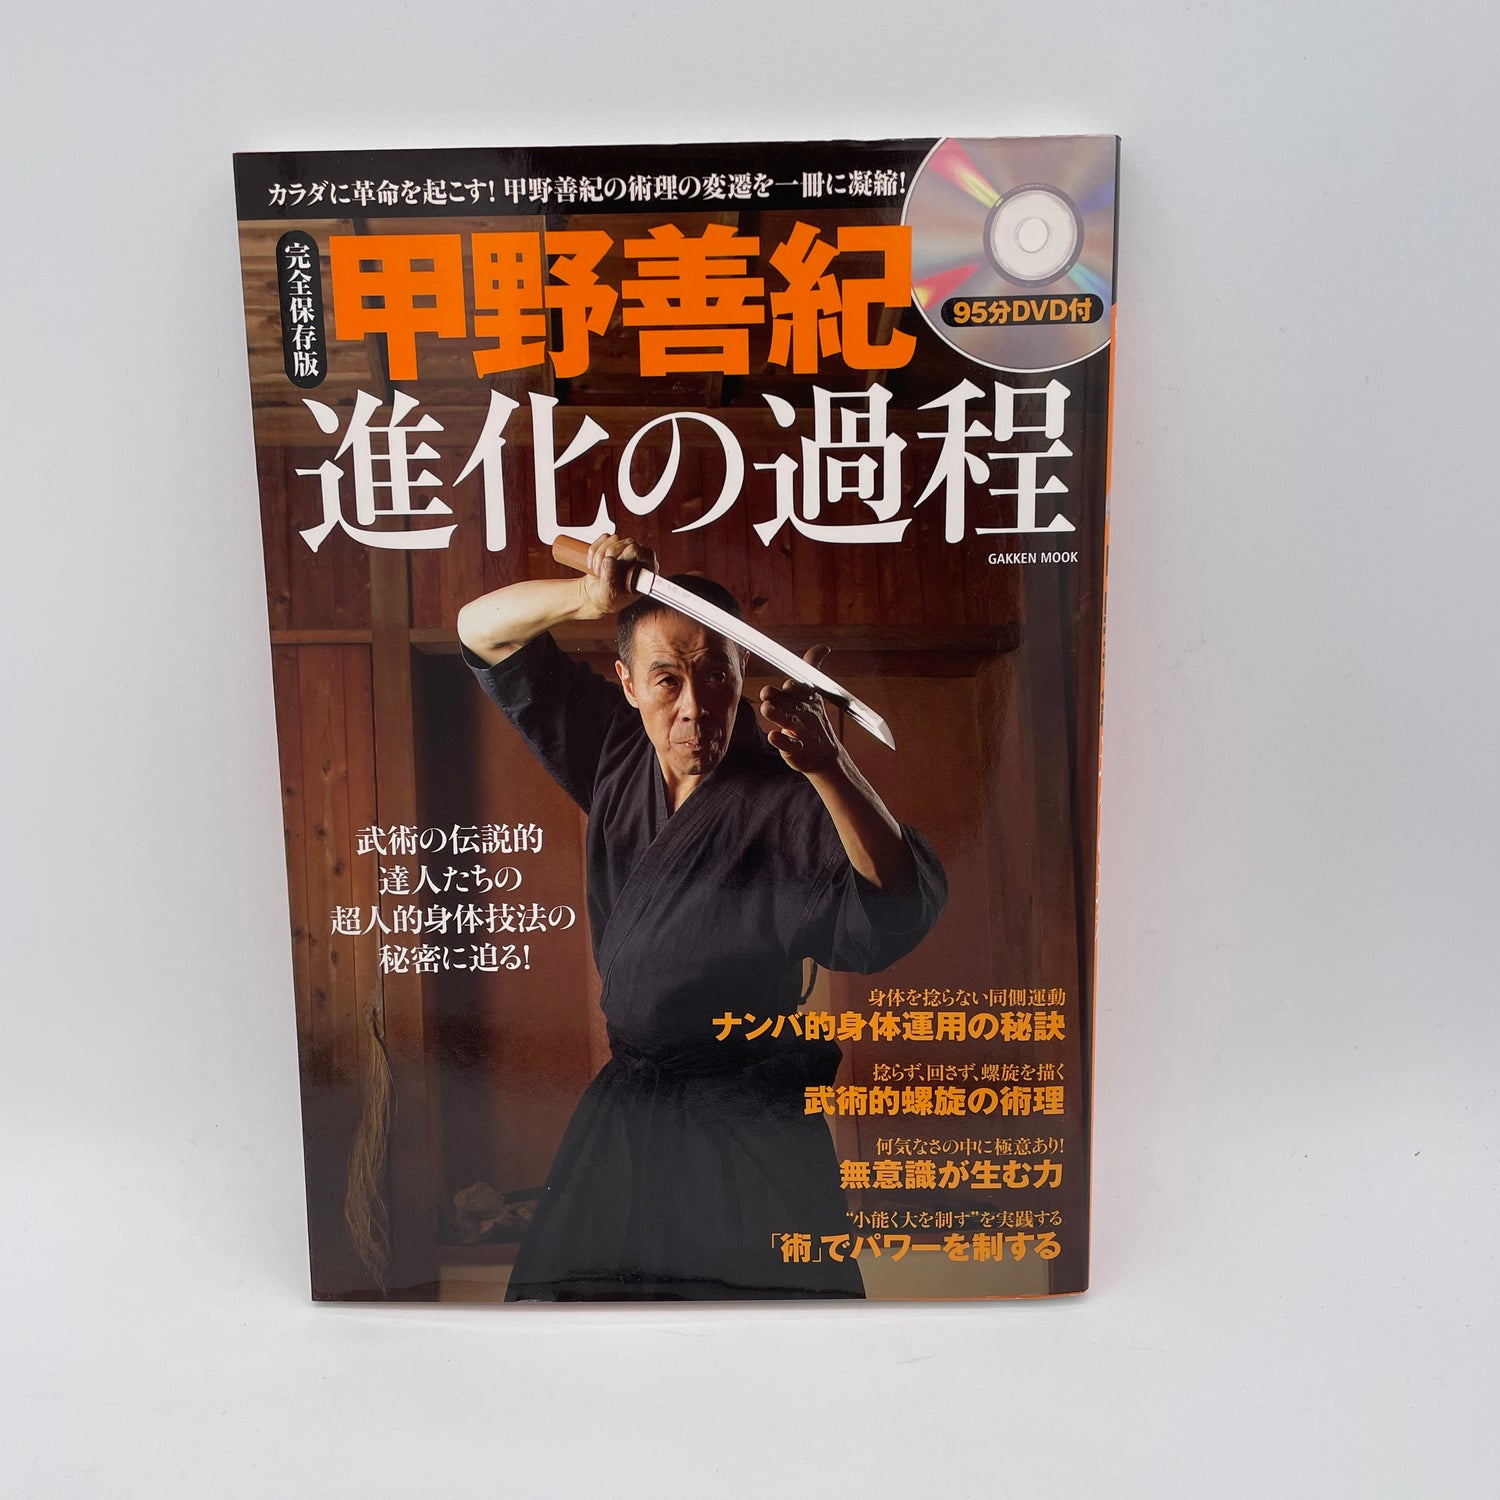 El proceso evolutivo de Yoshinori Kono Libro y DVD